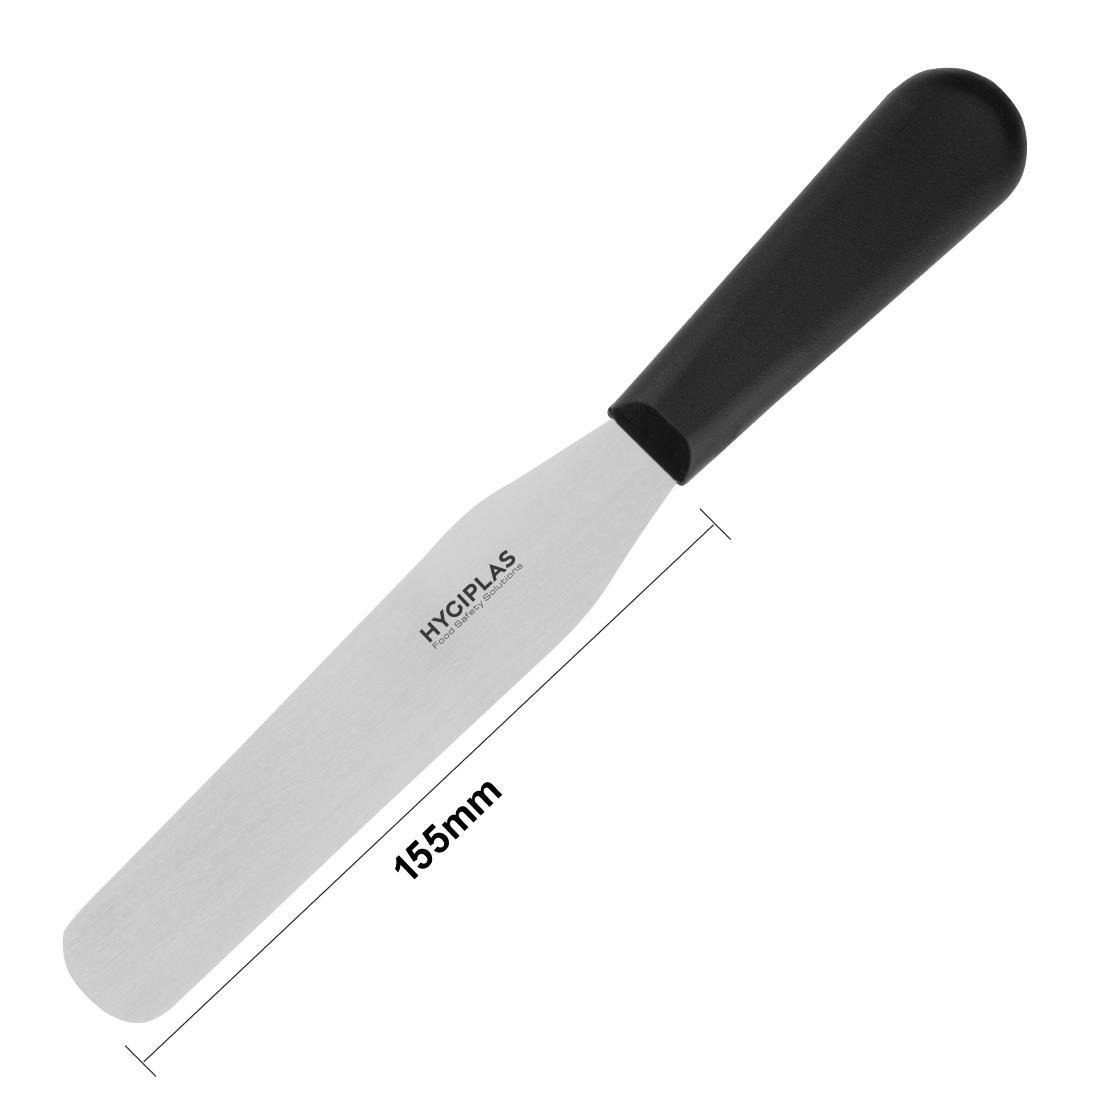 Hygiplas Straight Blade Palette Knife Black 15cm - D402  - 5